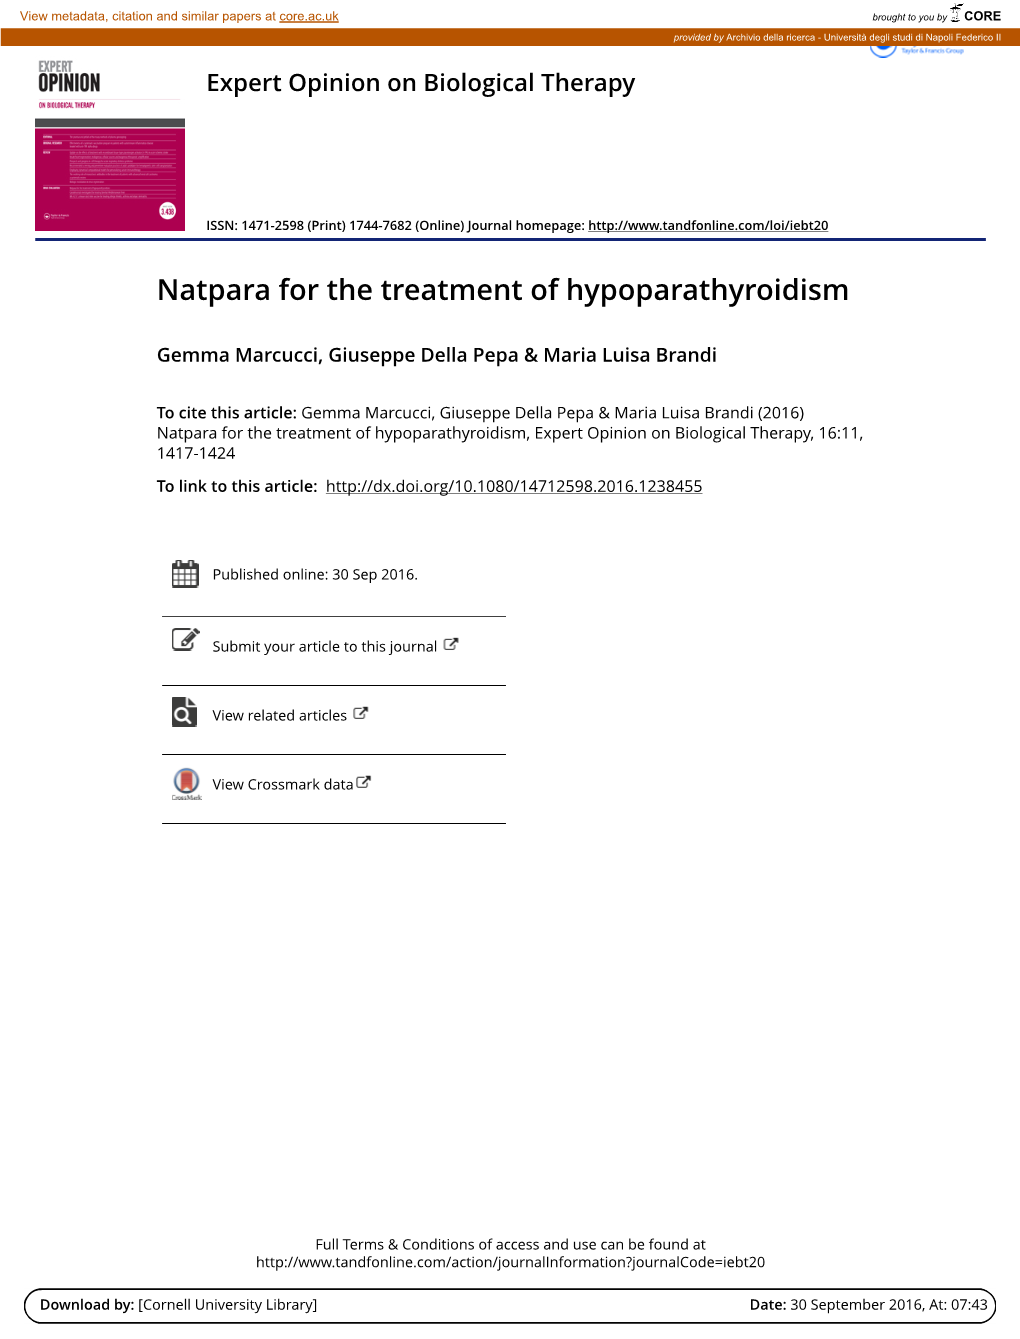 Natpara for the Treatment of Hypoparathyroidism